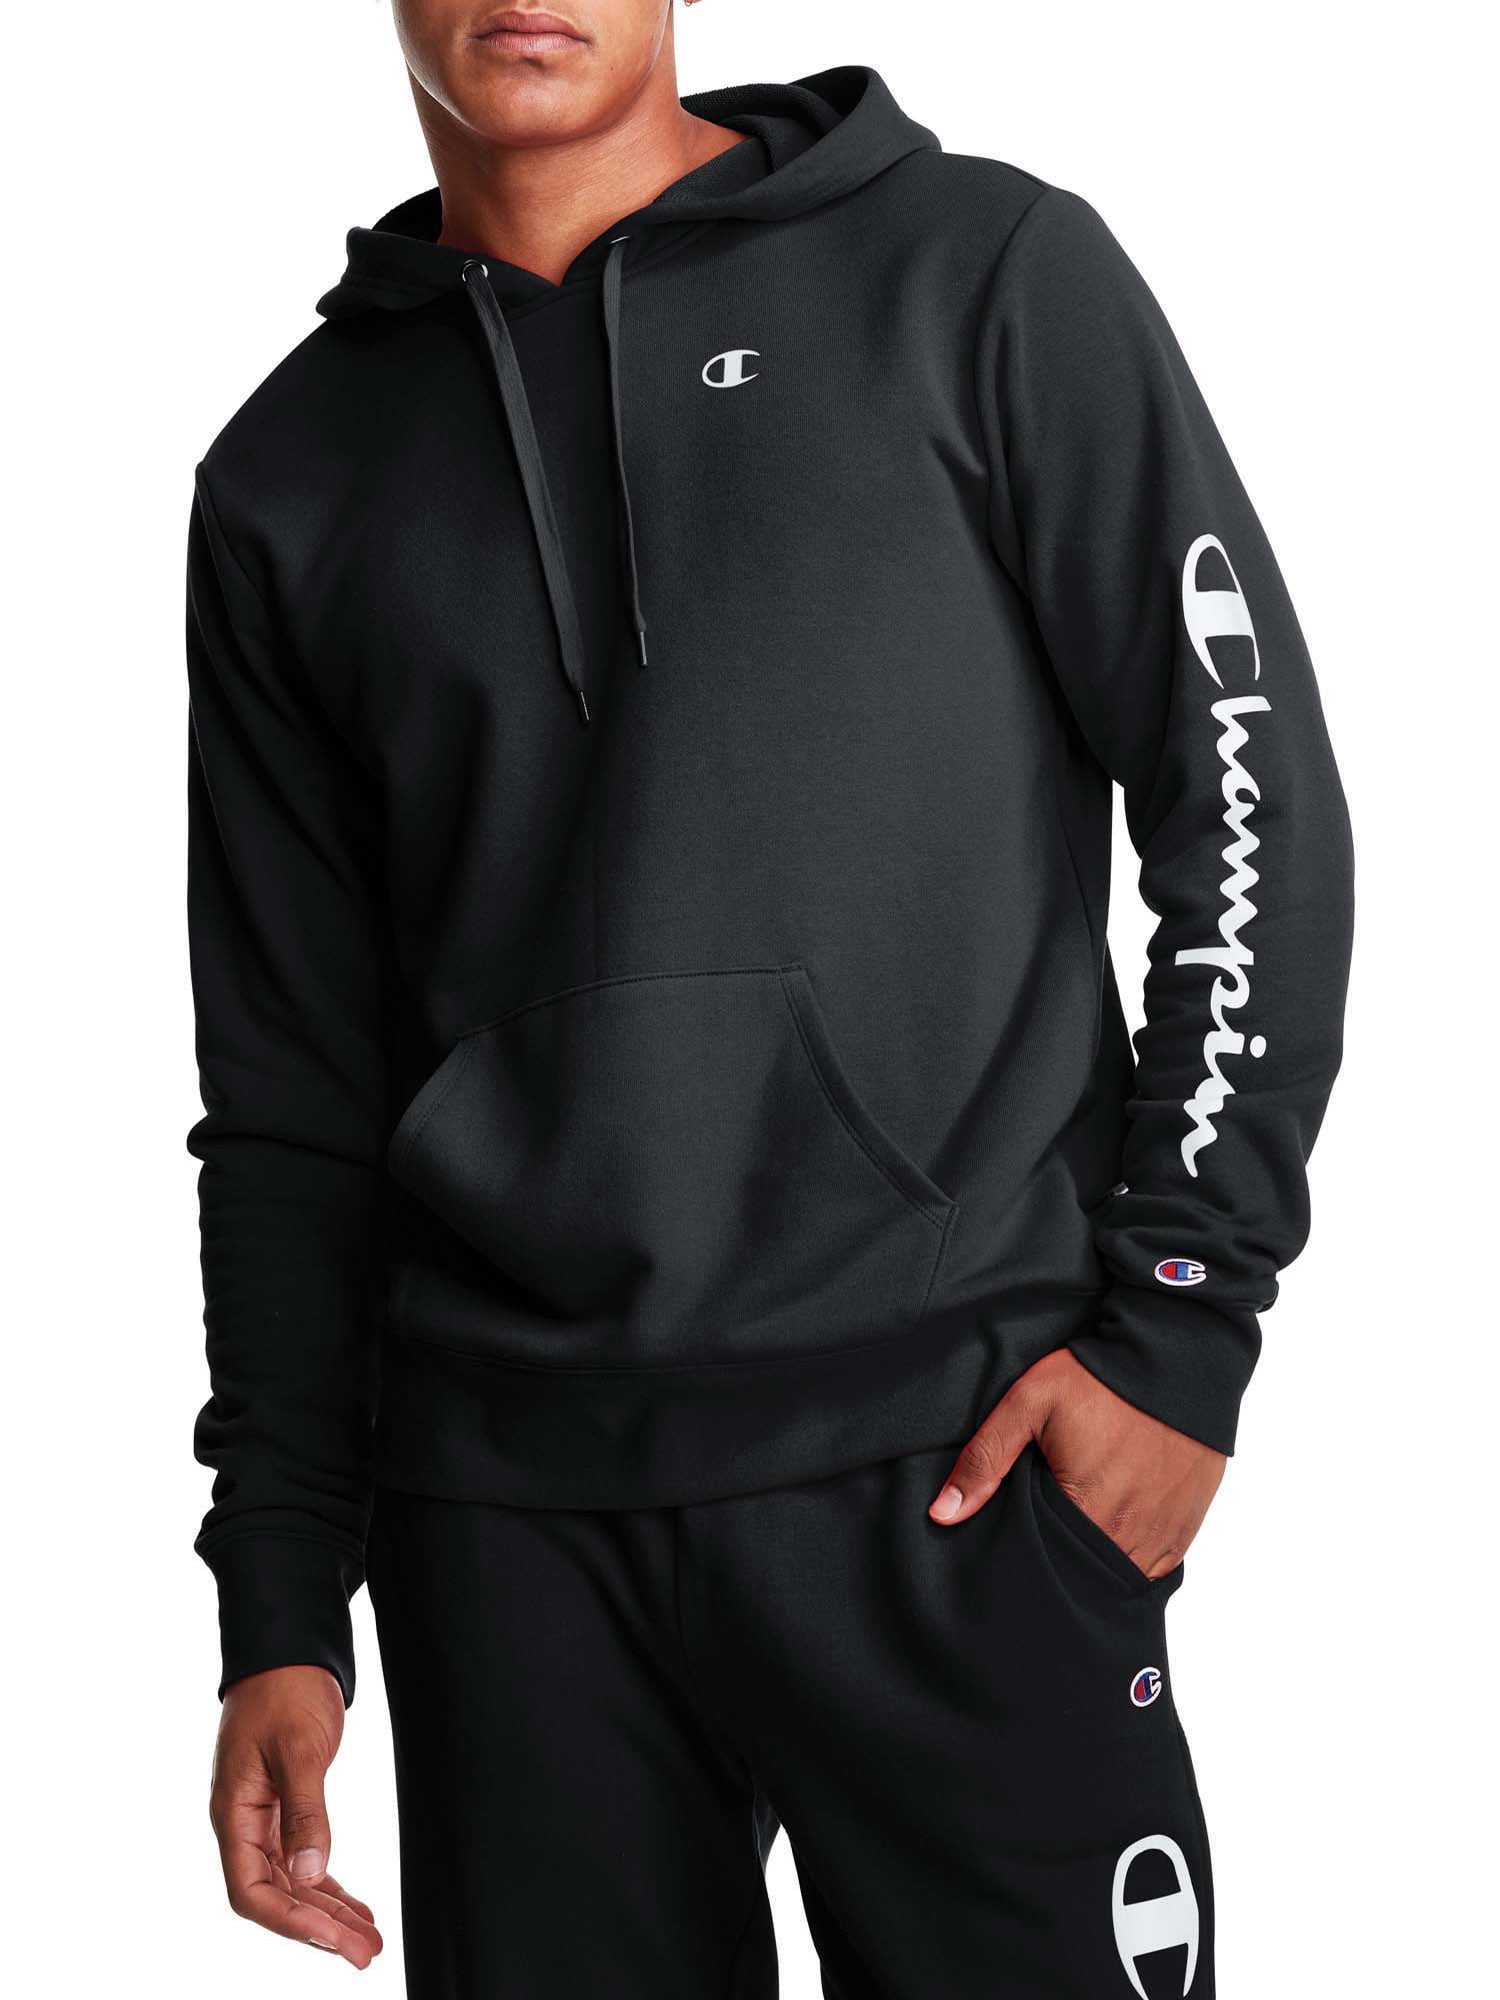 Champion sweatpant big logo vintage 90\u2019s black color champion sweatshirt hoodie jumper pullover jacket shirt size M